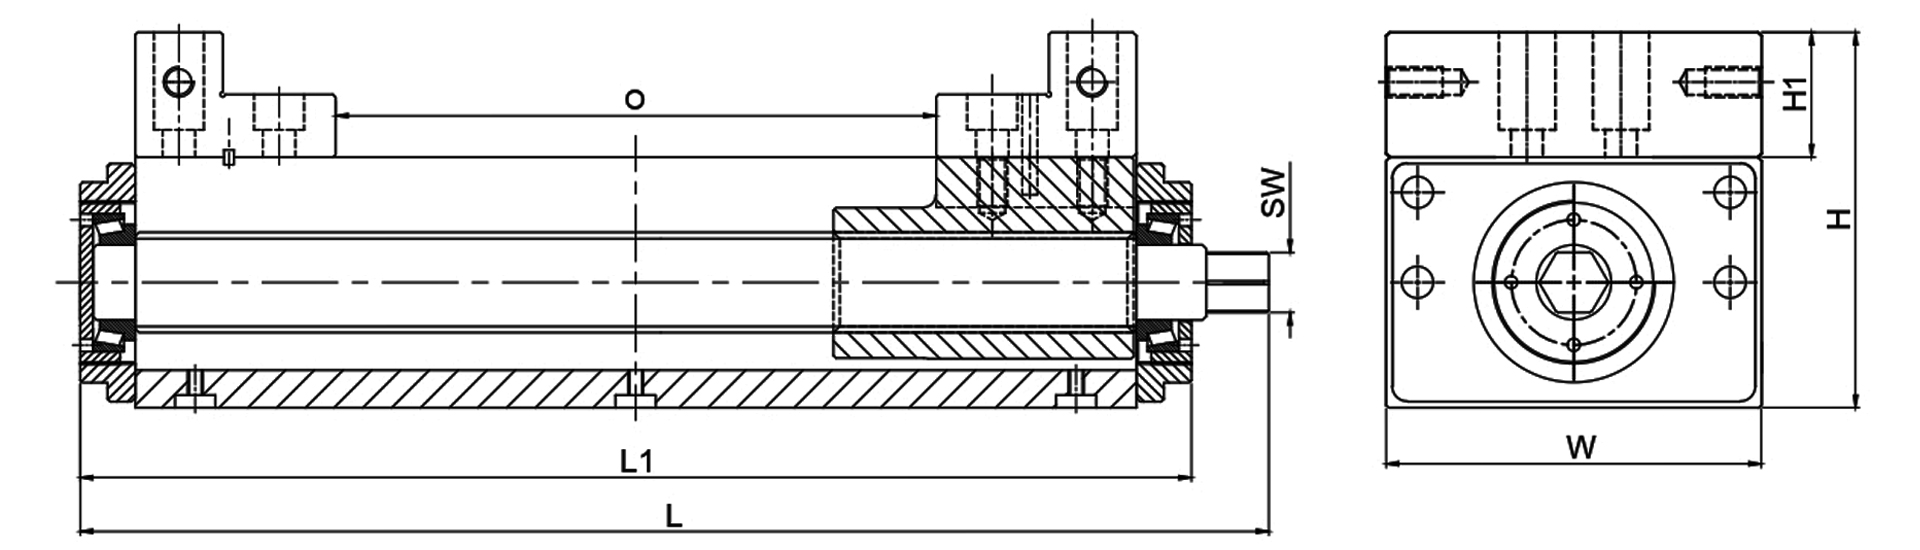 Milling Machine Vise - mechanical